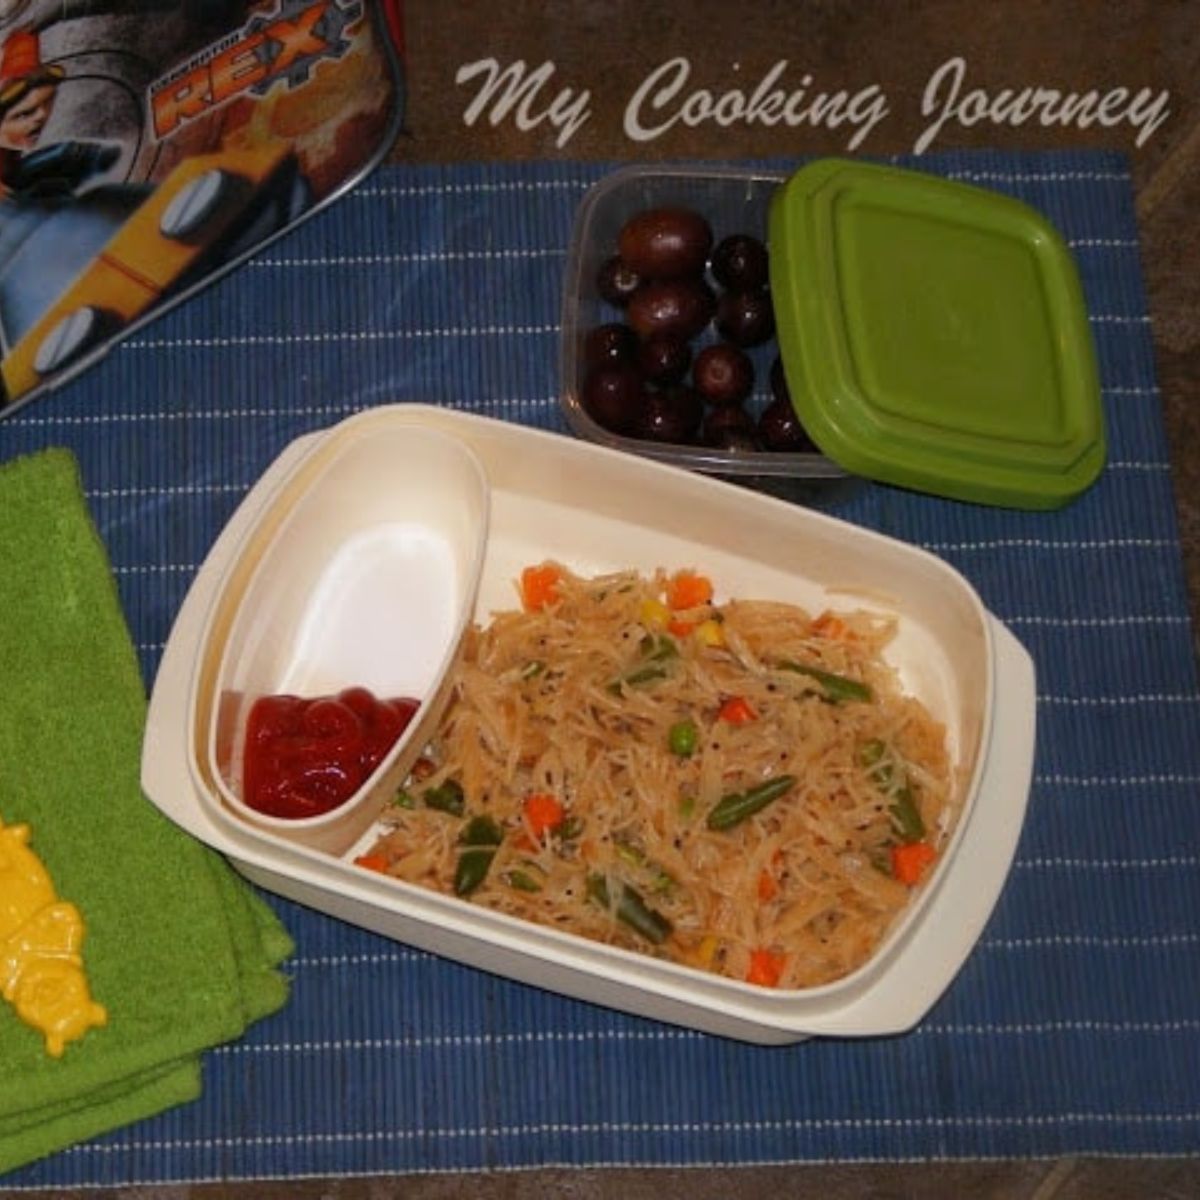 76 Veg Kids Lunch Box Recipes, Indian Lunch Box Ideas